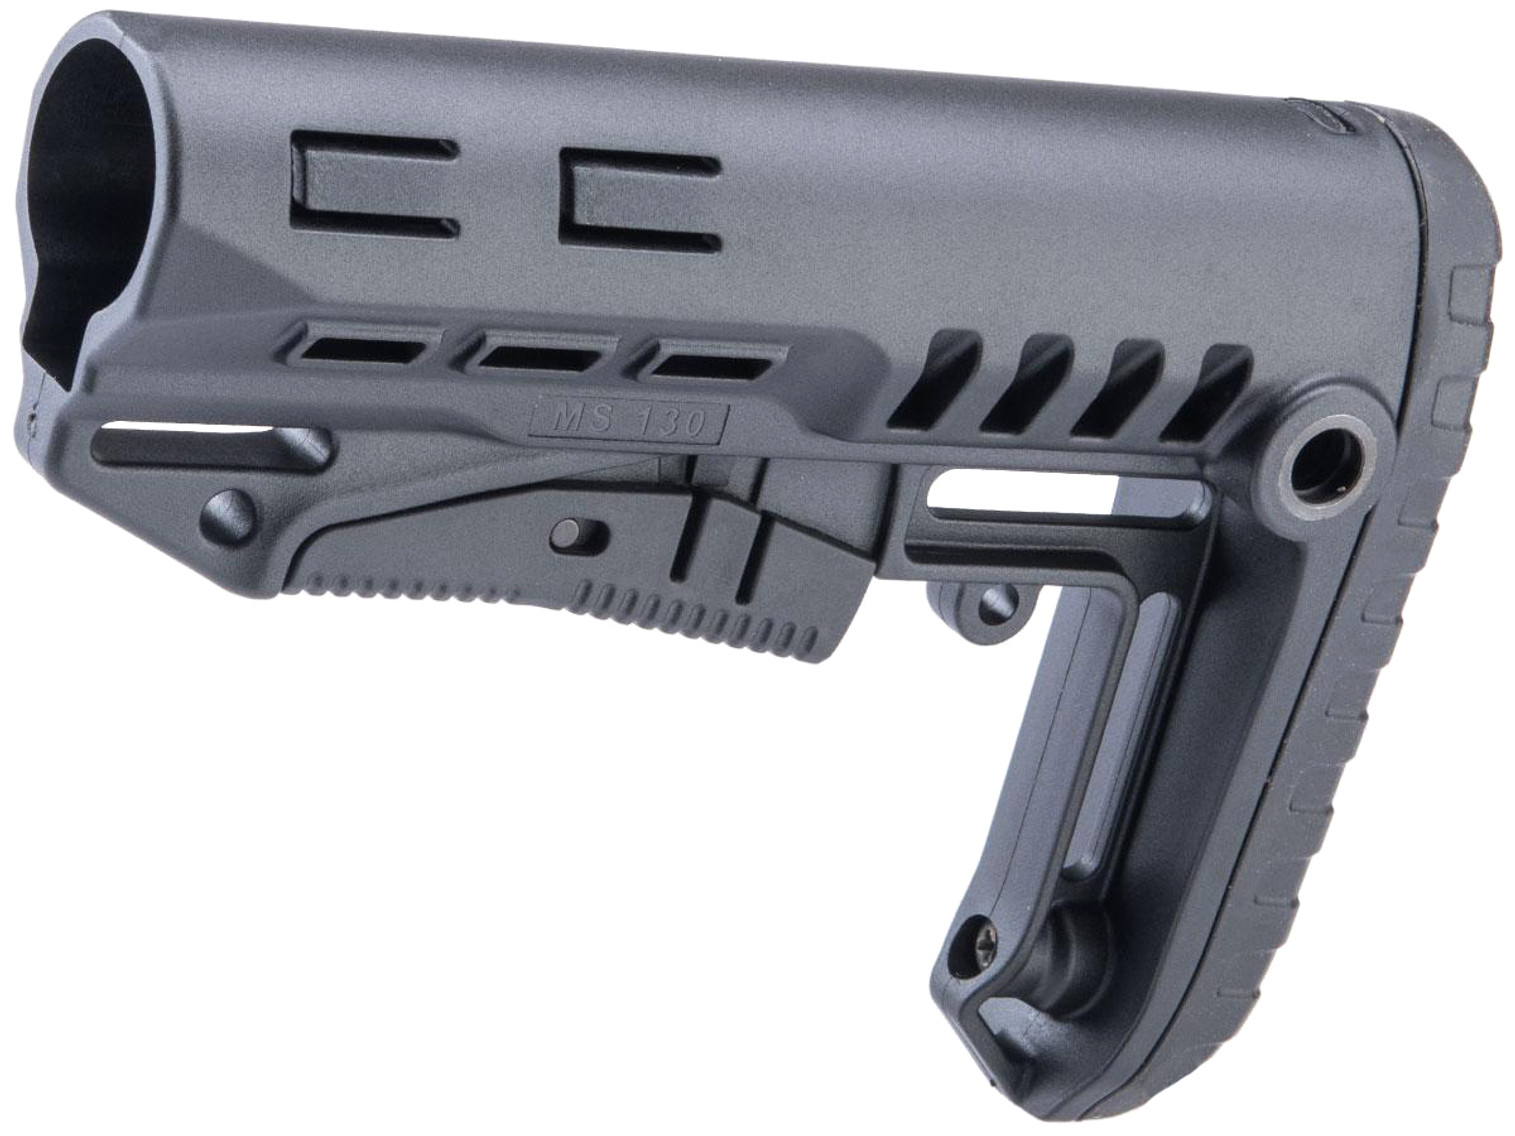 VISM DLG Compact Low Profile Adjustable Stock for M4 / M16 Series Milspec Rifles